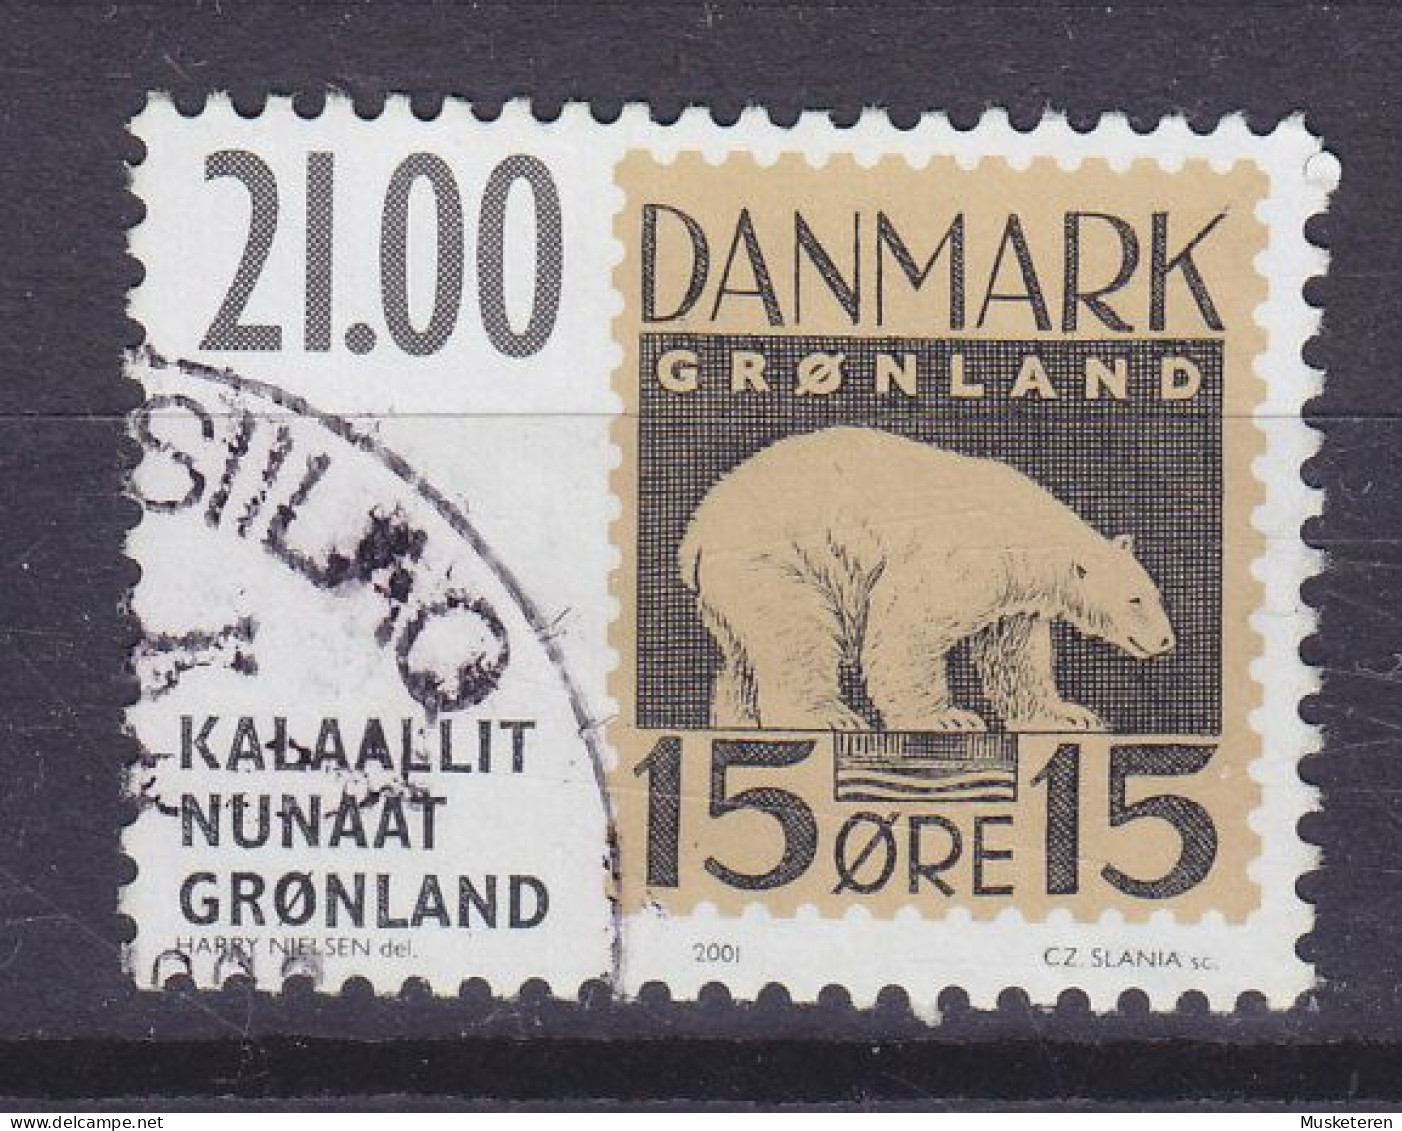 Greenland 2001 Mi. 373, 21.00 Kr Internationale Briefmarken Ausstellung HAFNIA '01 'Eisbär' Polar Bear - Gebruikt